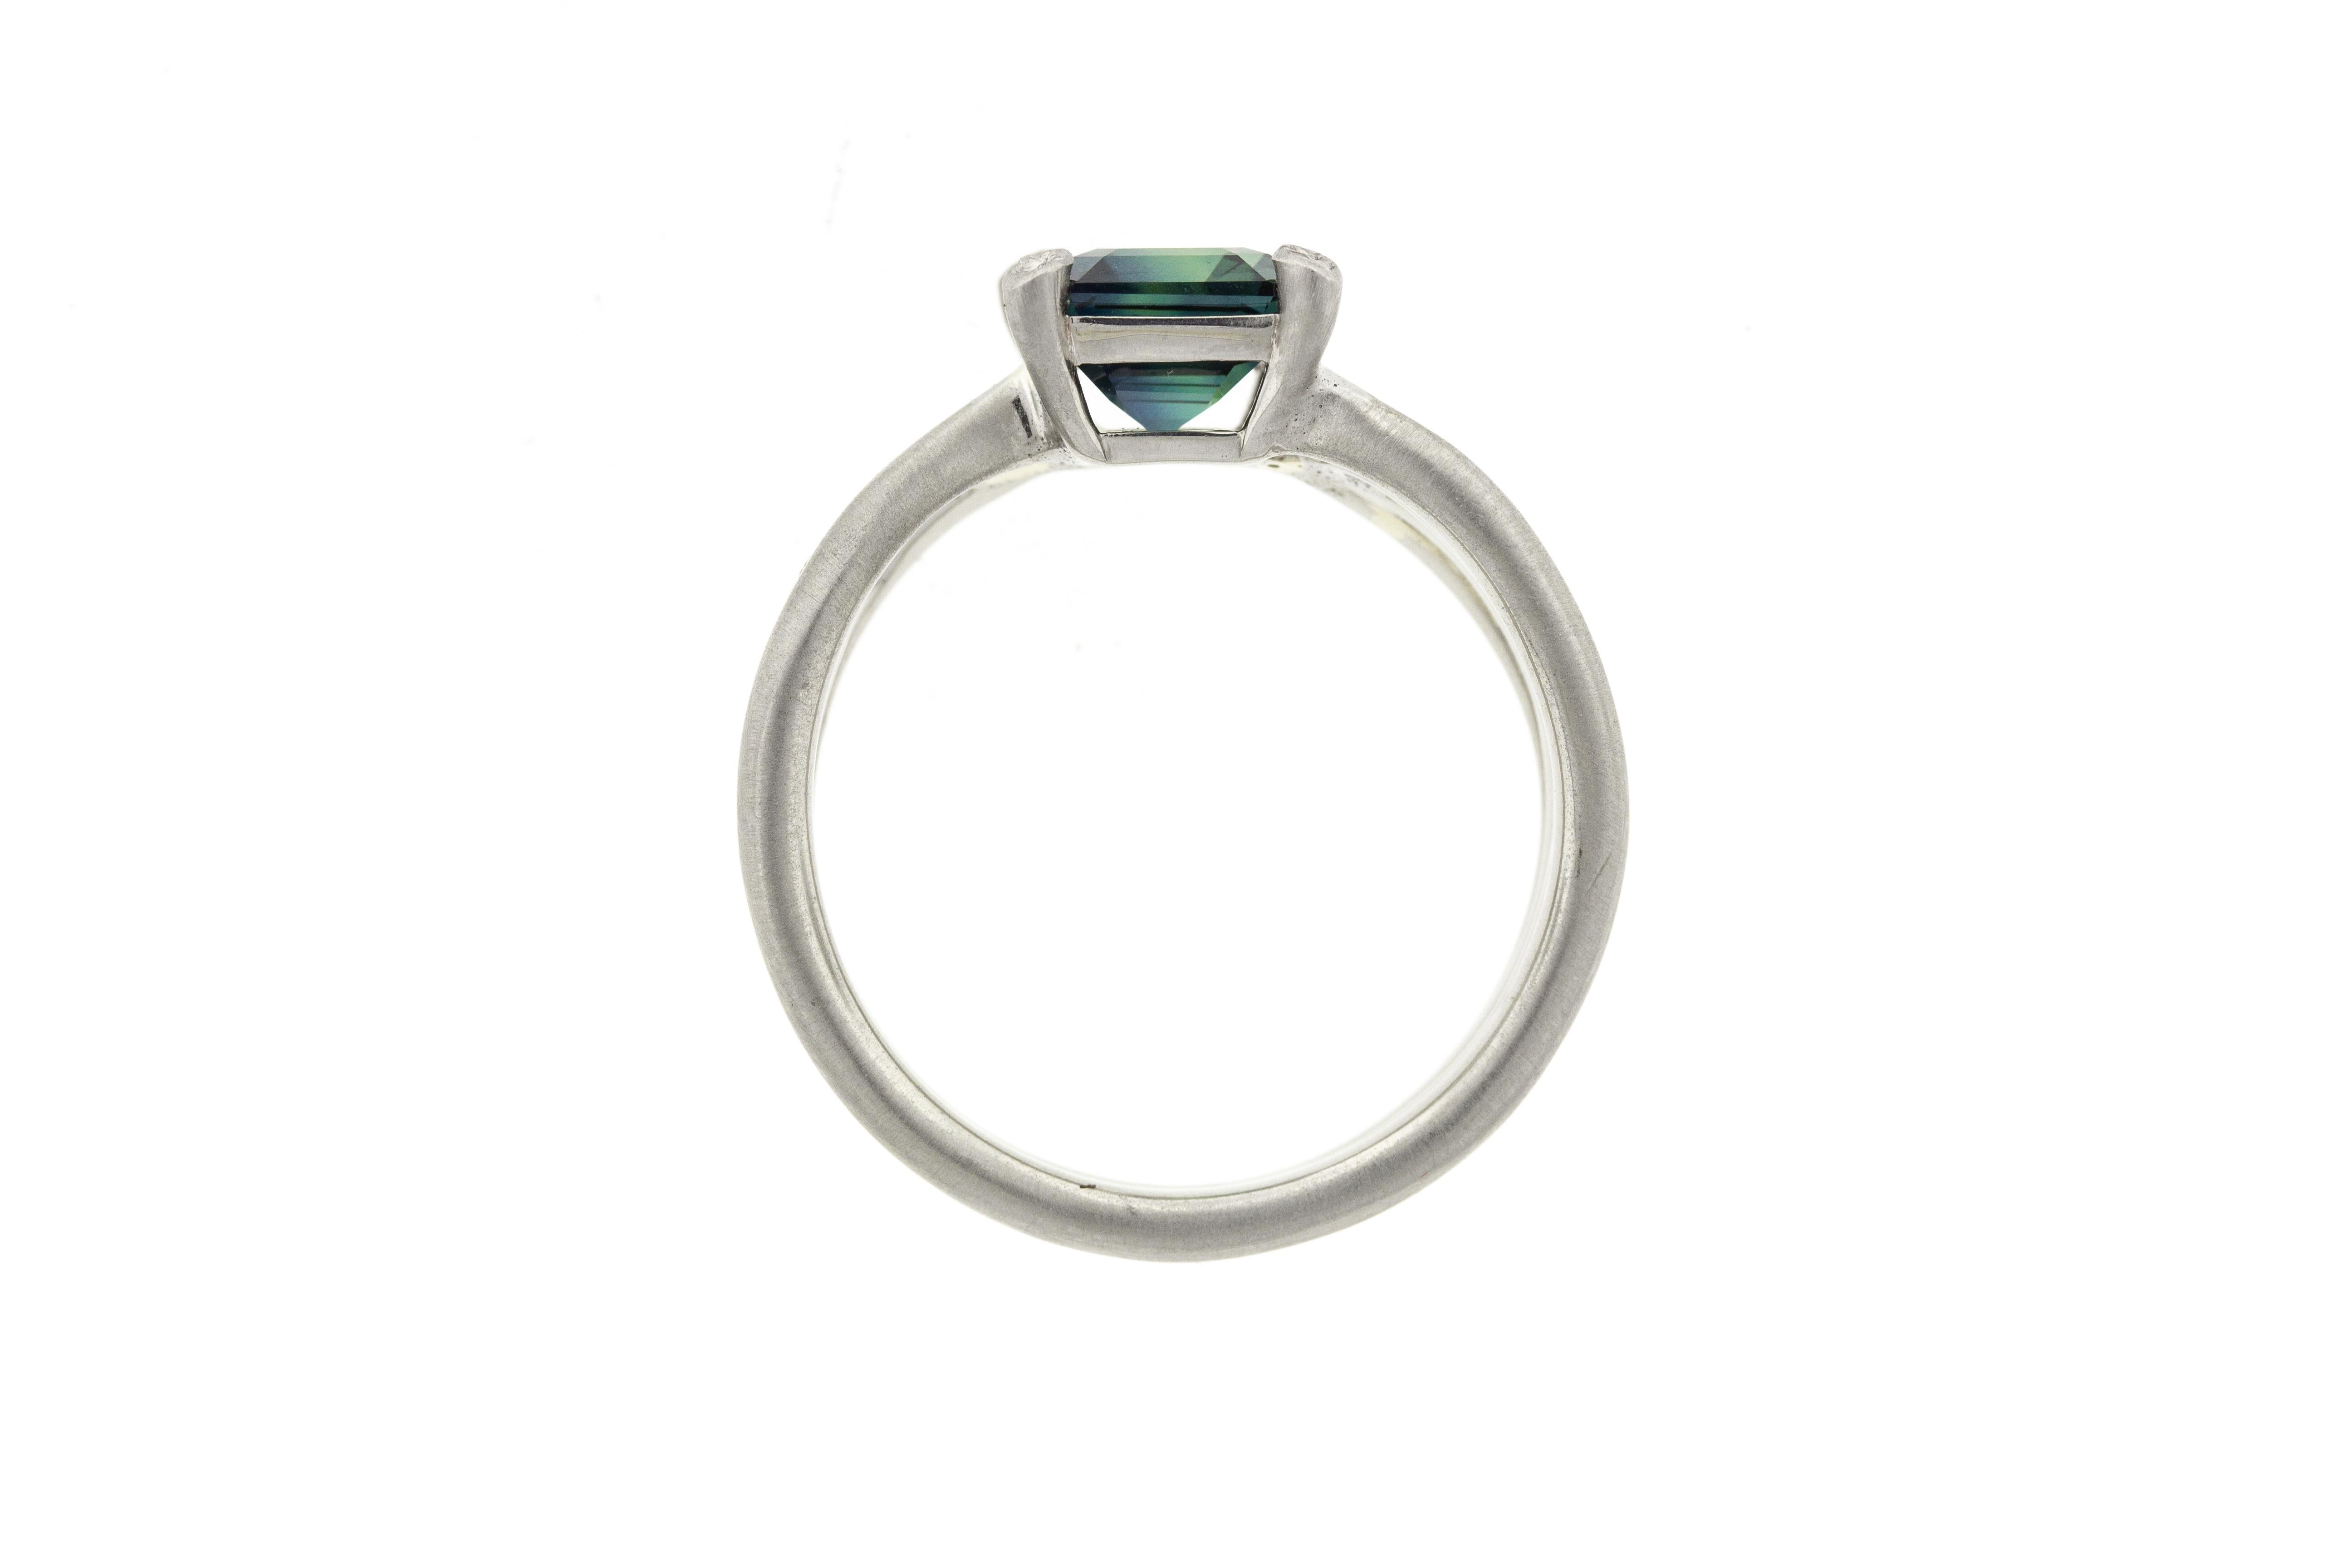 montana sapphire engagement rings